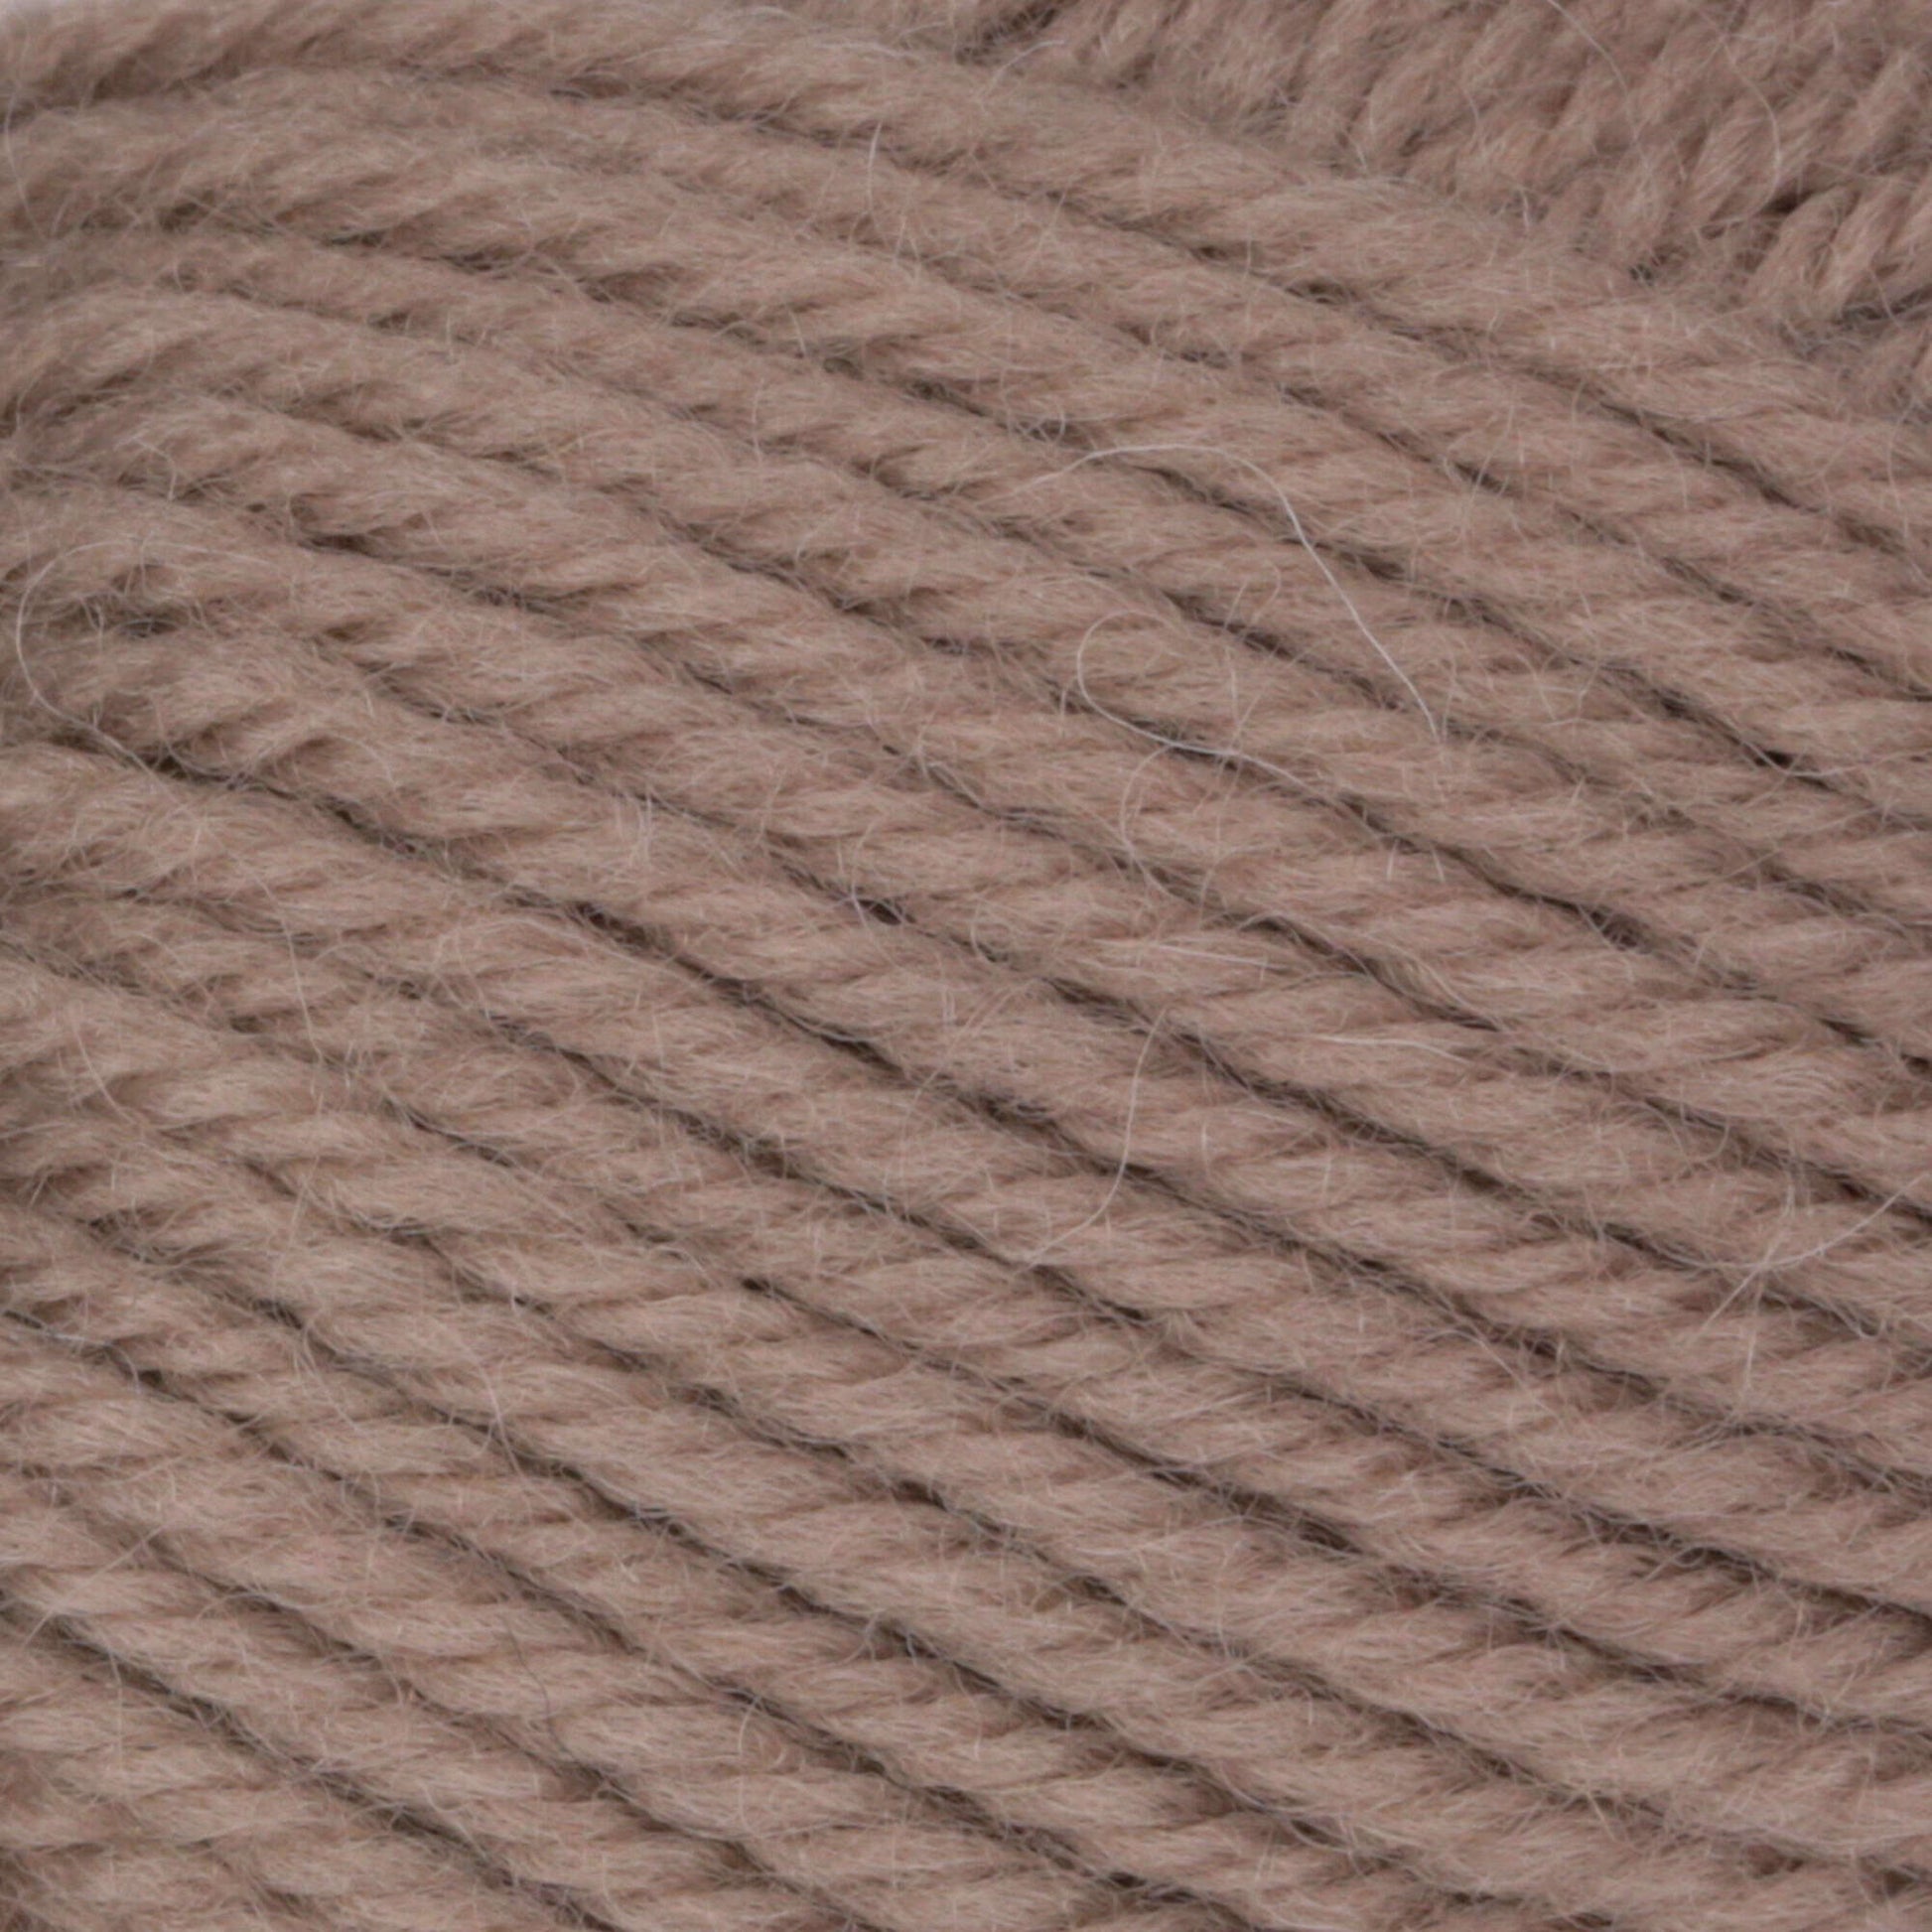 Patons Classic Wool DK Superwash Yarn - Discontinued Shades Latte